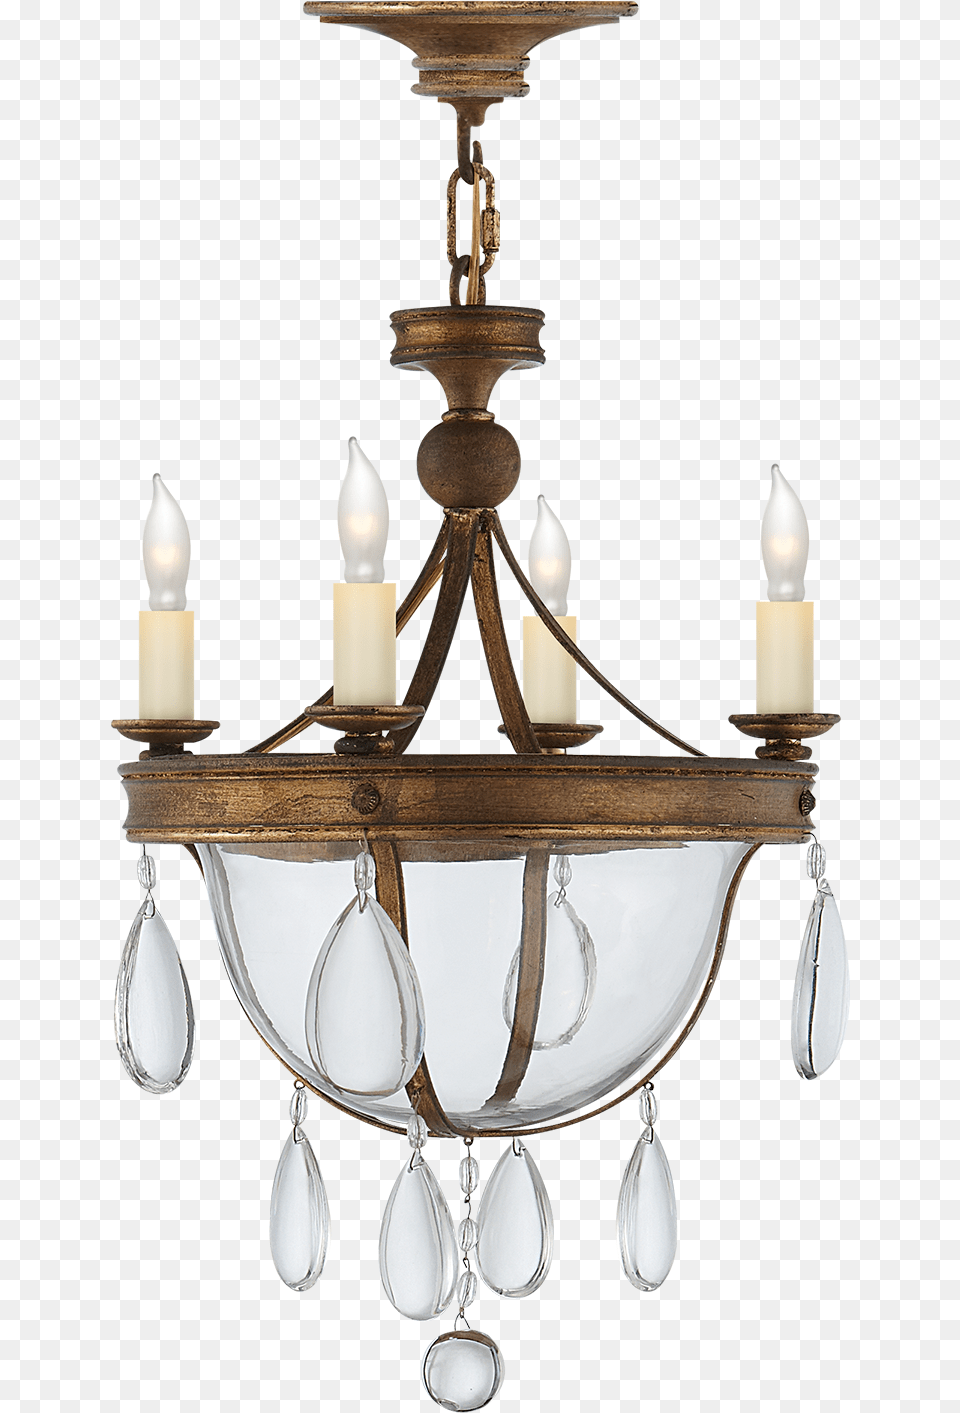 Chandelier, Lamp, Light Fixture, Candle Free Transparent Png